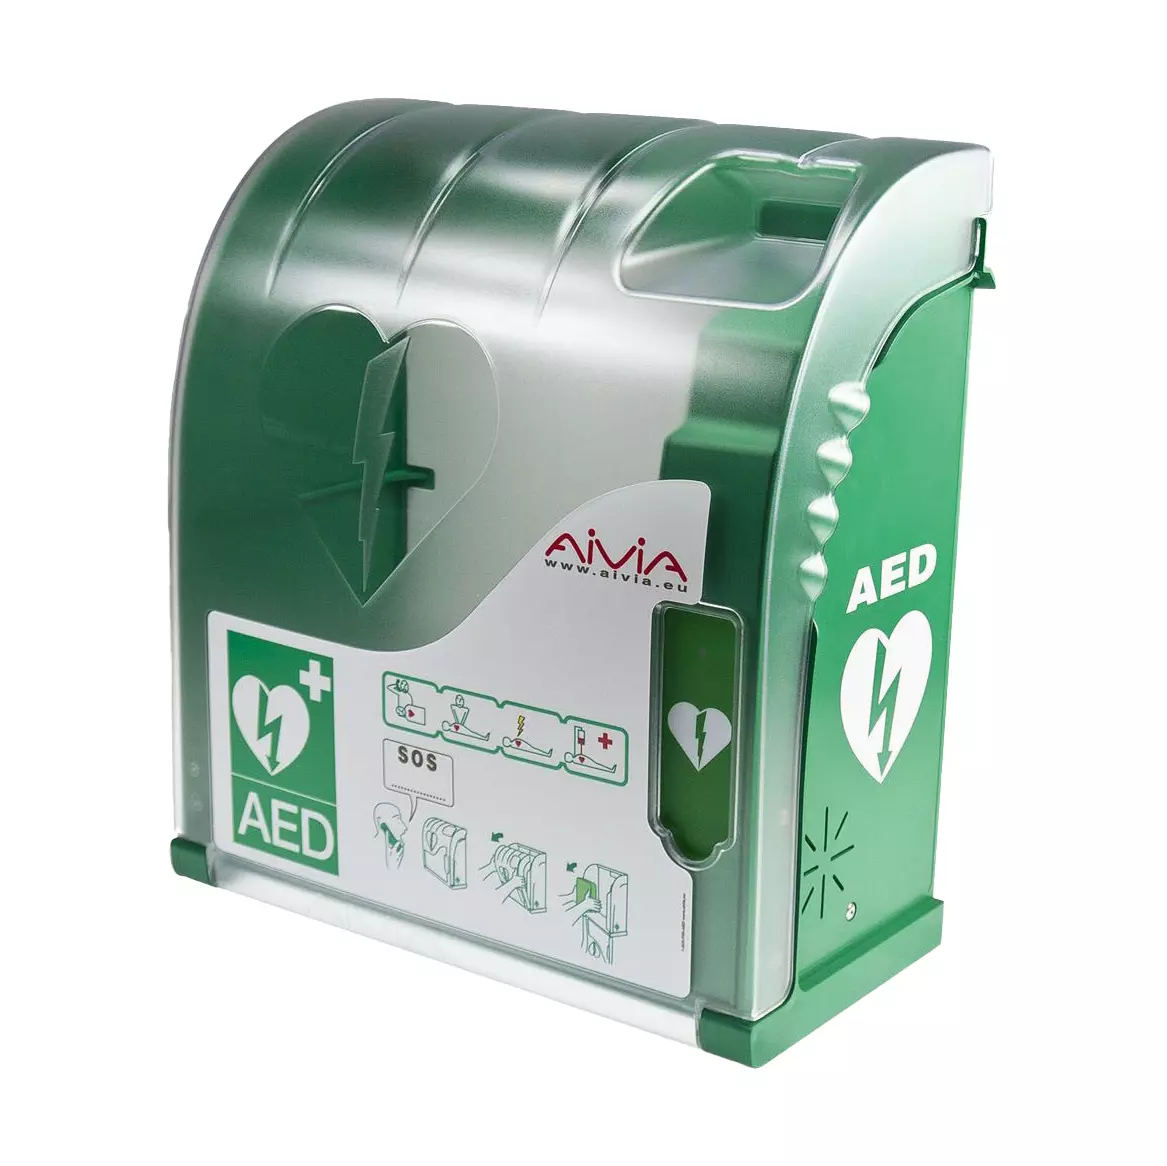 Aivia 200 AED Outdoorschrank